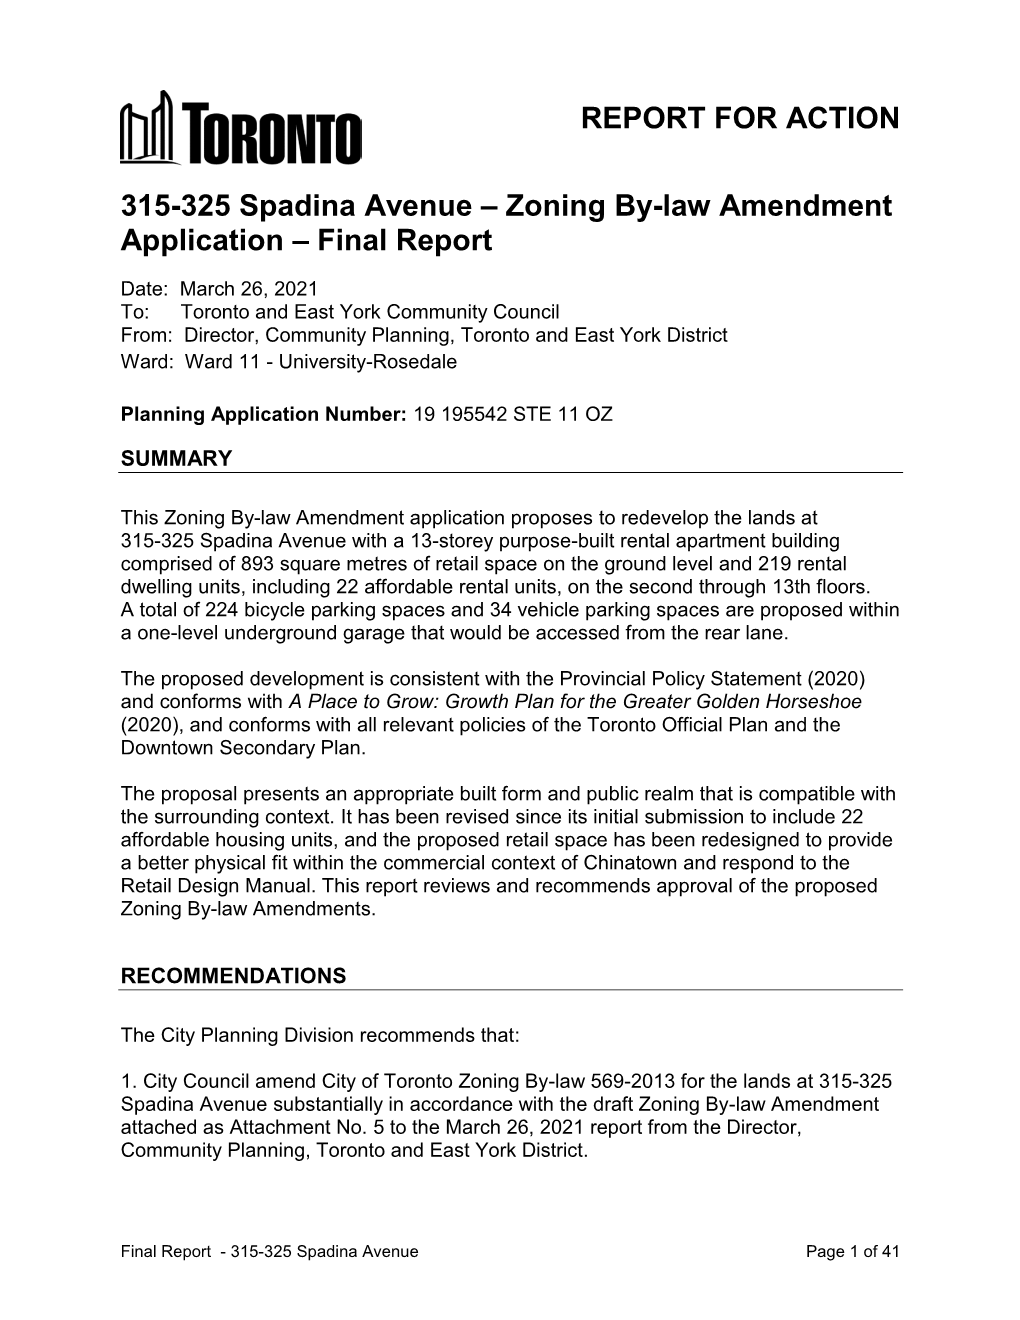 315-325 Spadina Avenue – Zoning By-Law Amendment Application – Final Report